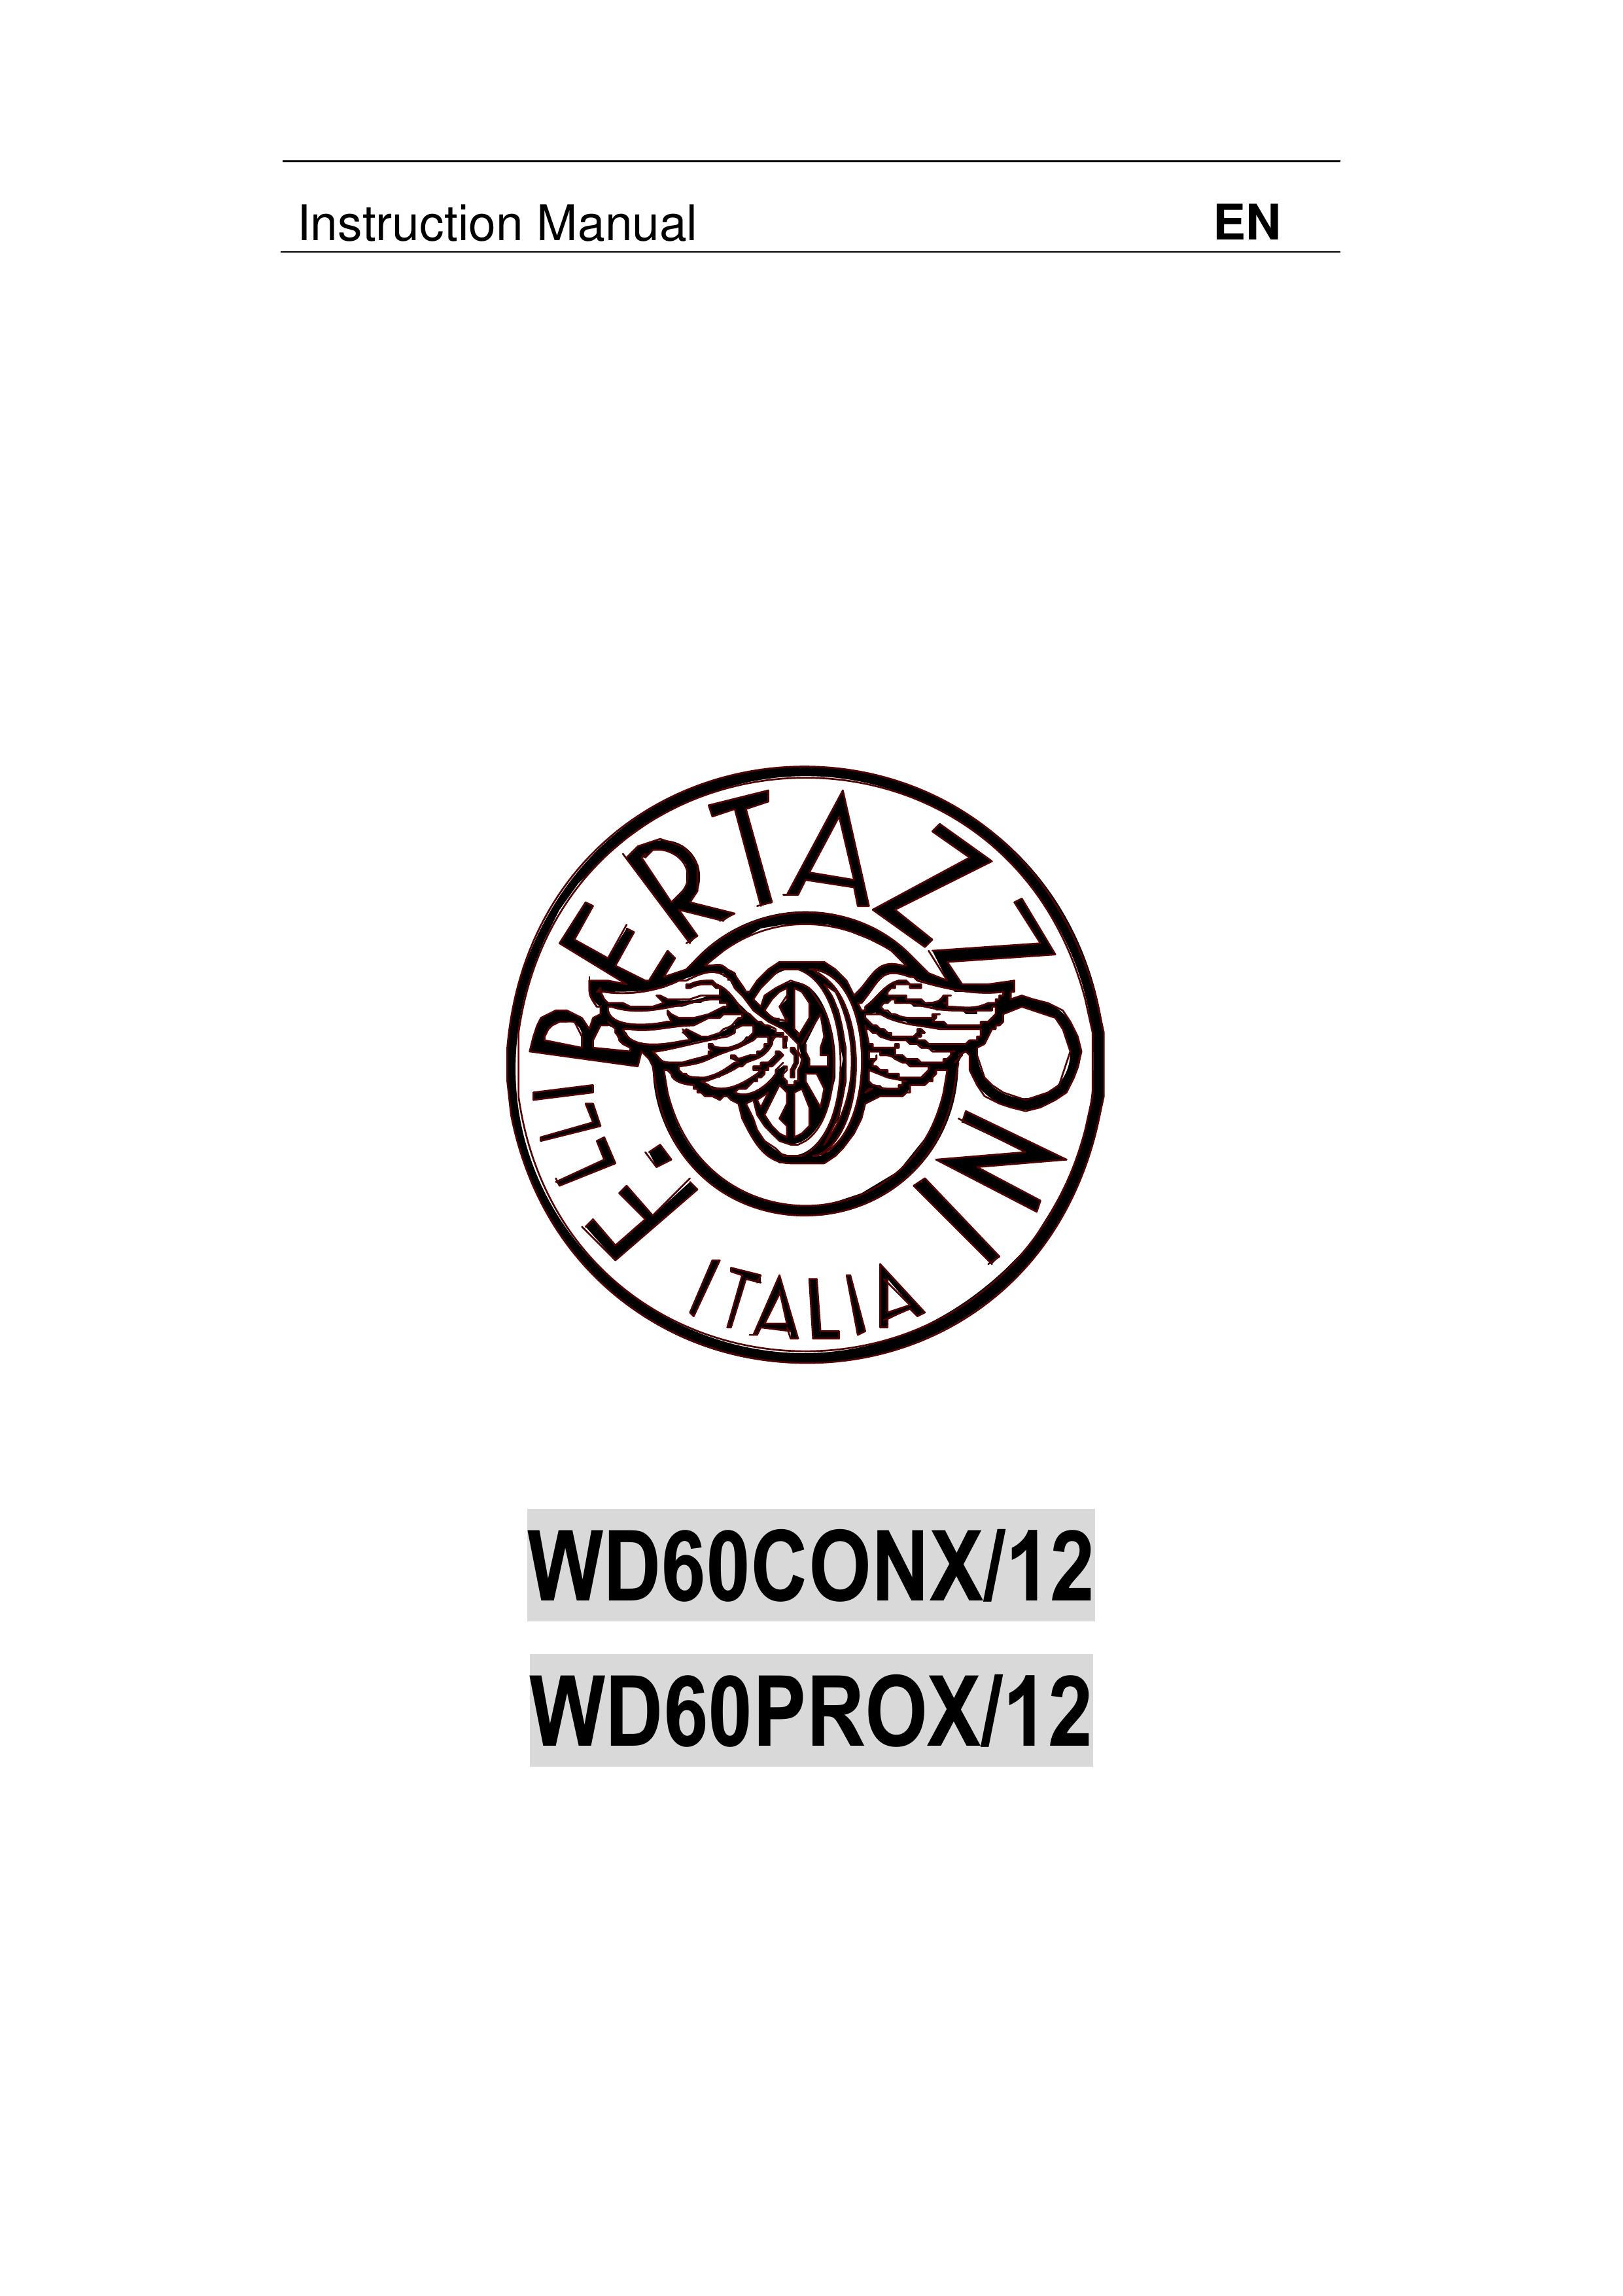 Bertazzoni WD60PROX/12 Slow Cooker User Manual